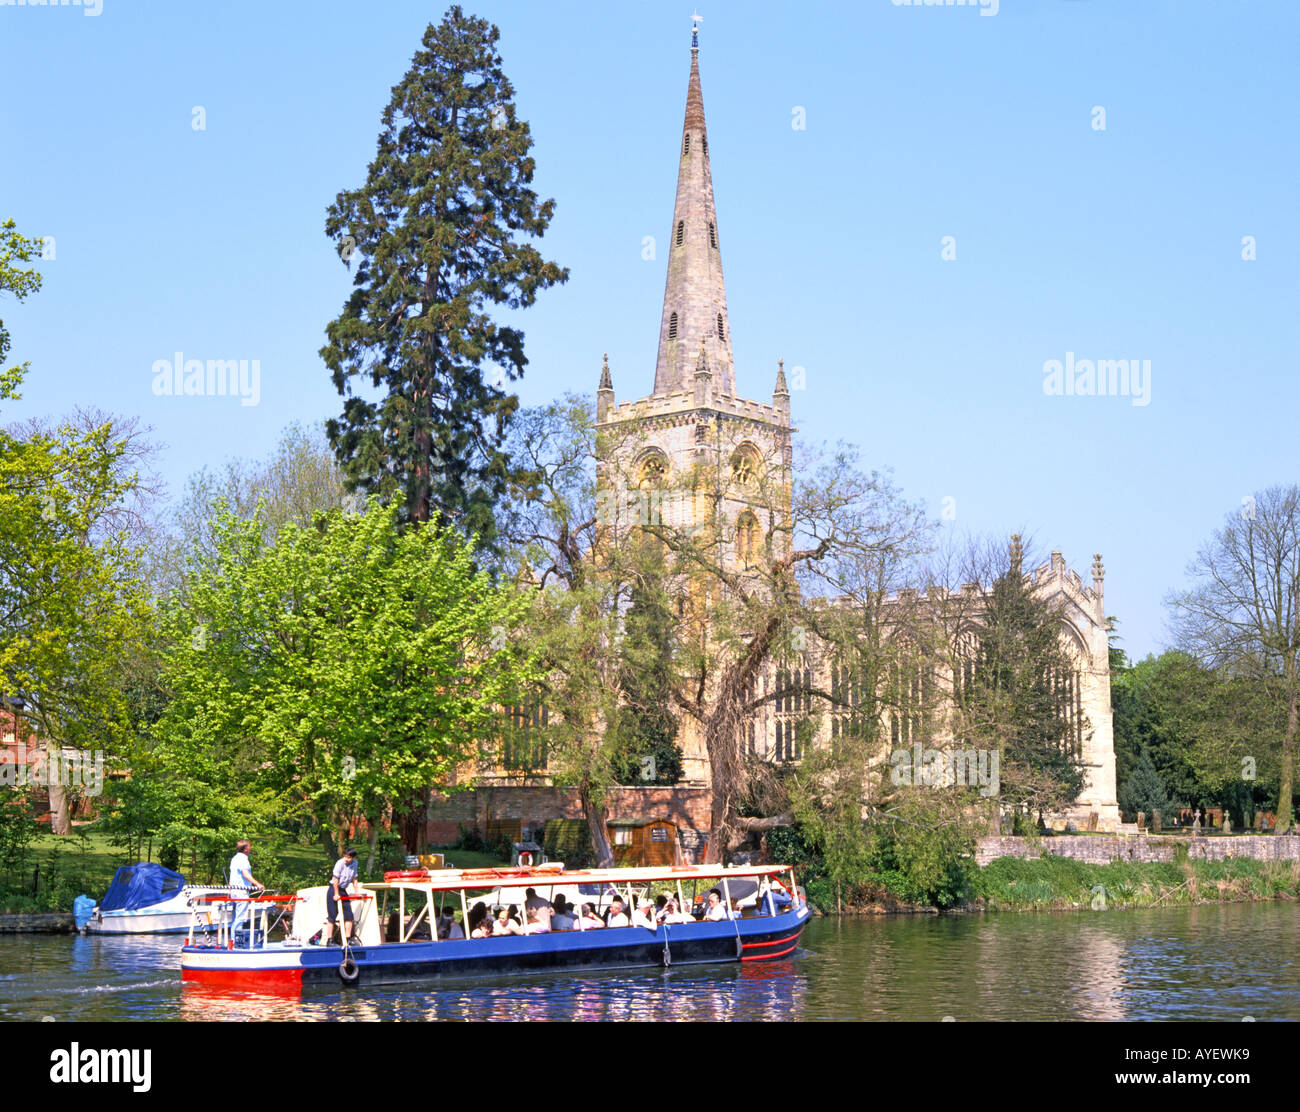 Narrow boat on river Avon passing Holy Trinity Church, Stratford-upon-Avon, Warwickshire, England Stock Photo